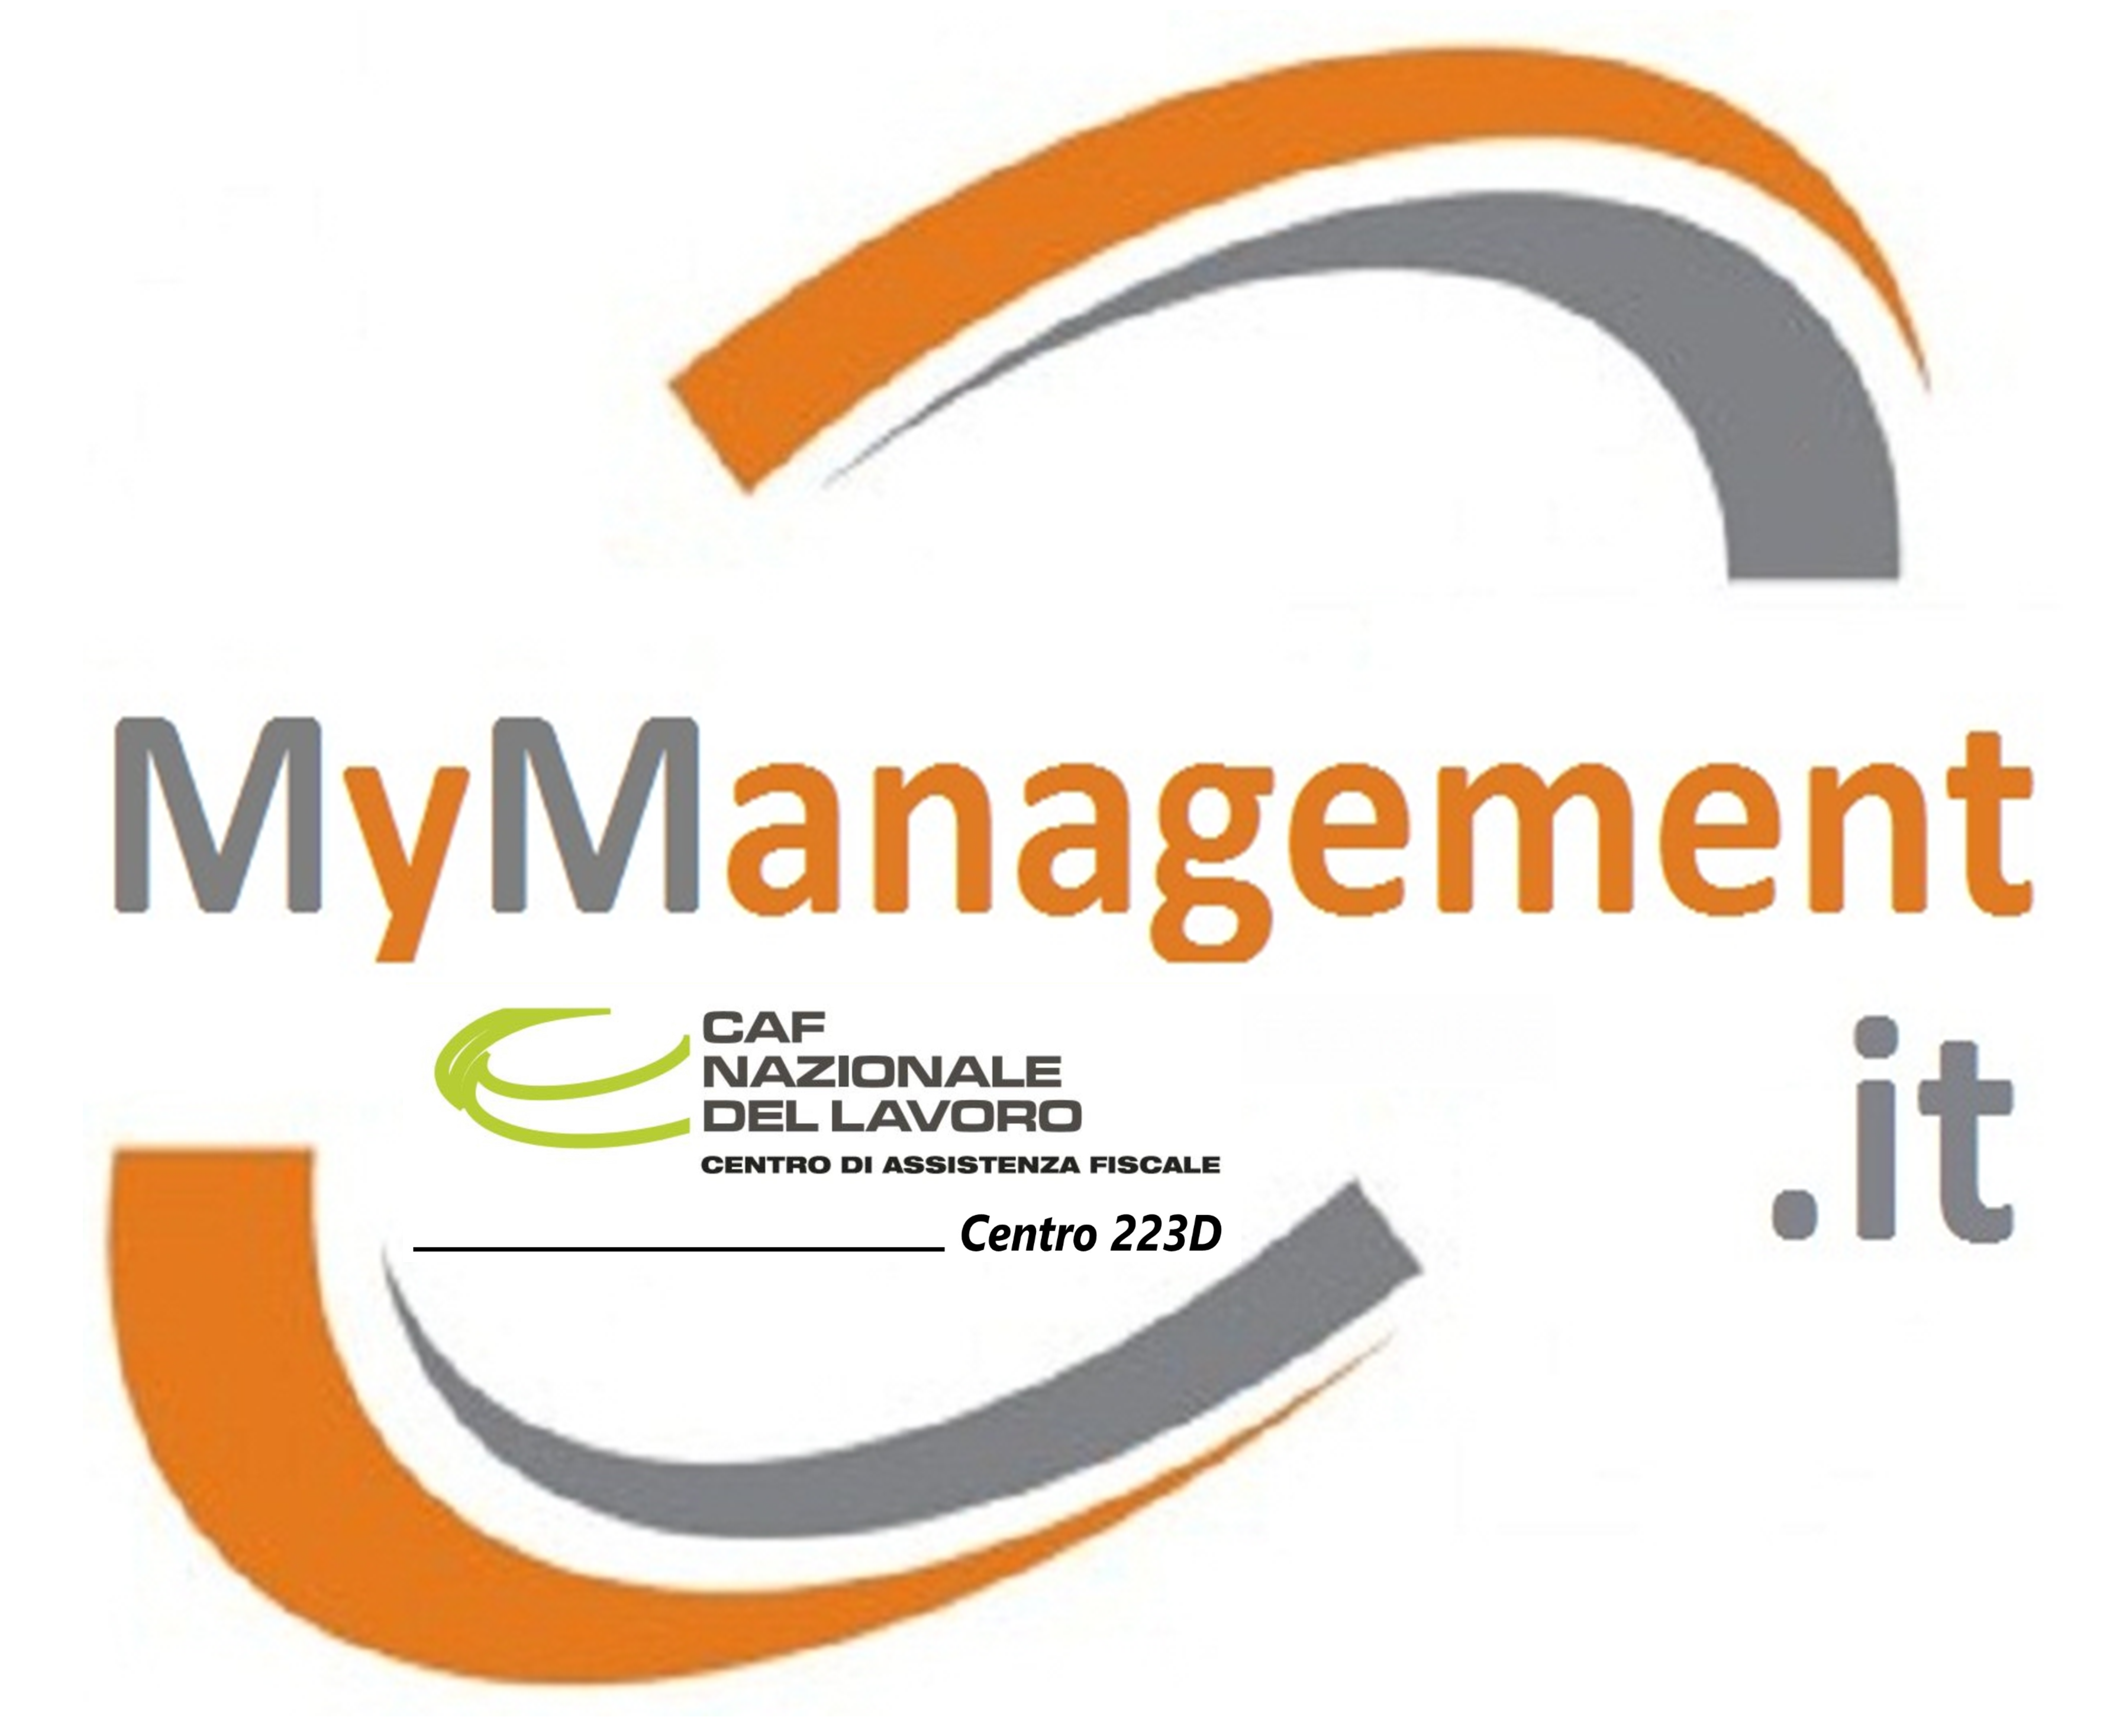 My Management – Caf, contabilità, Privacy e assistenza digitale a Catania e Valguarnera